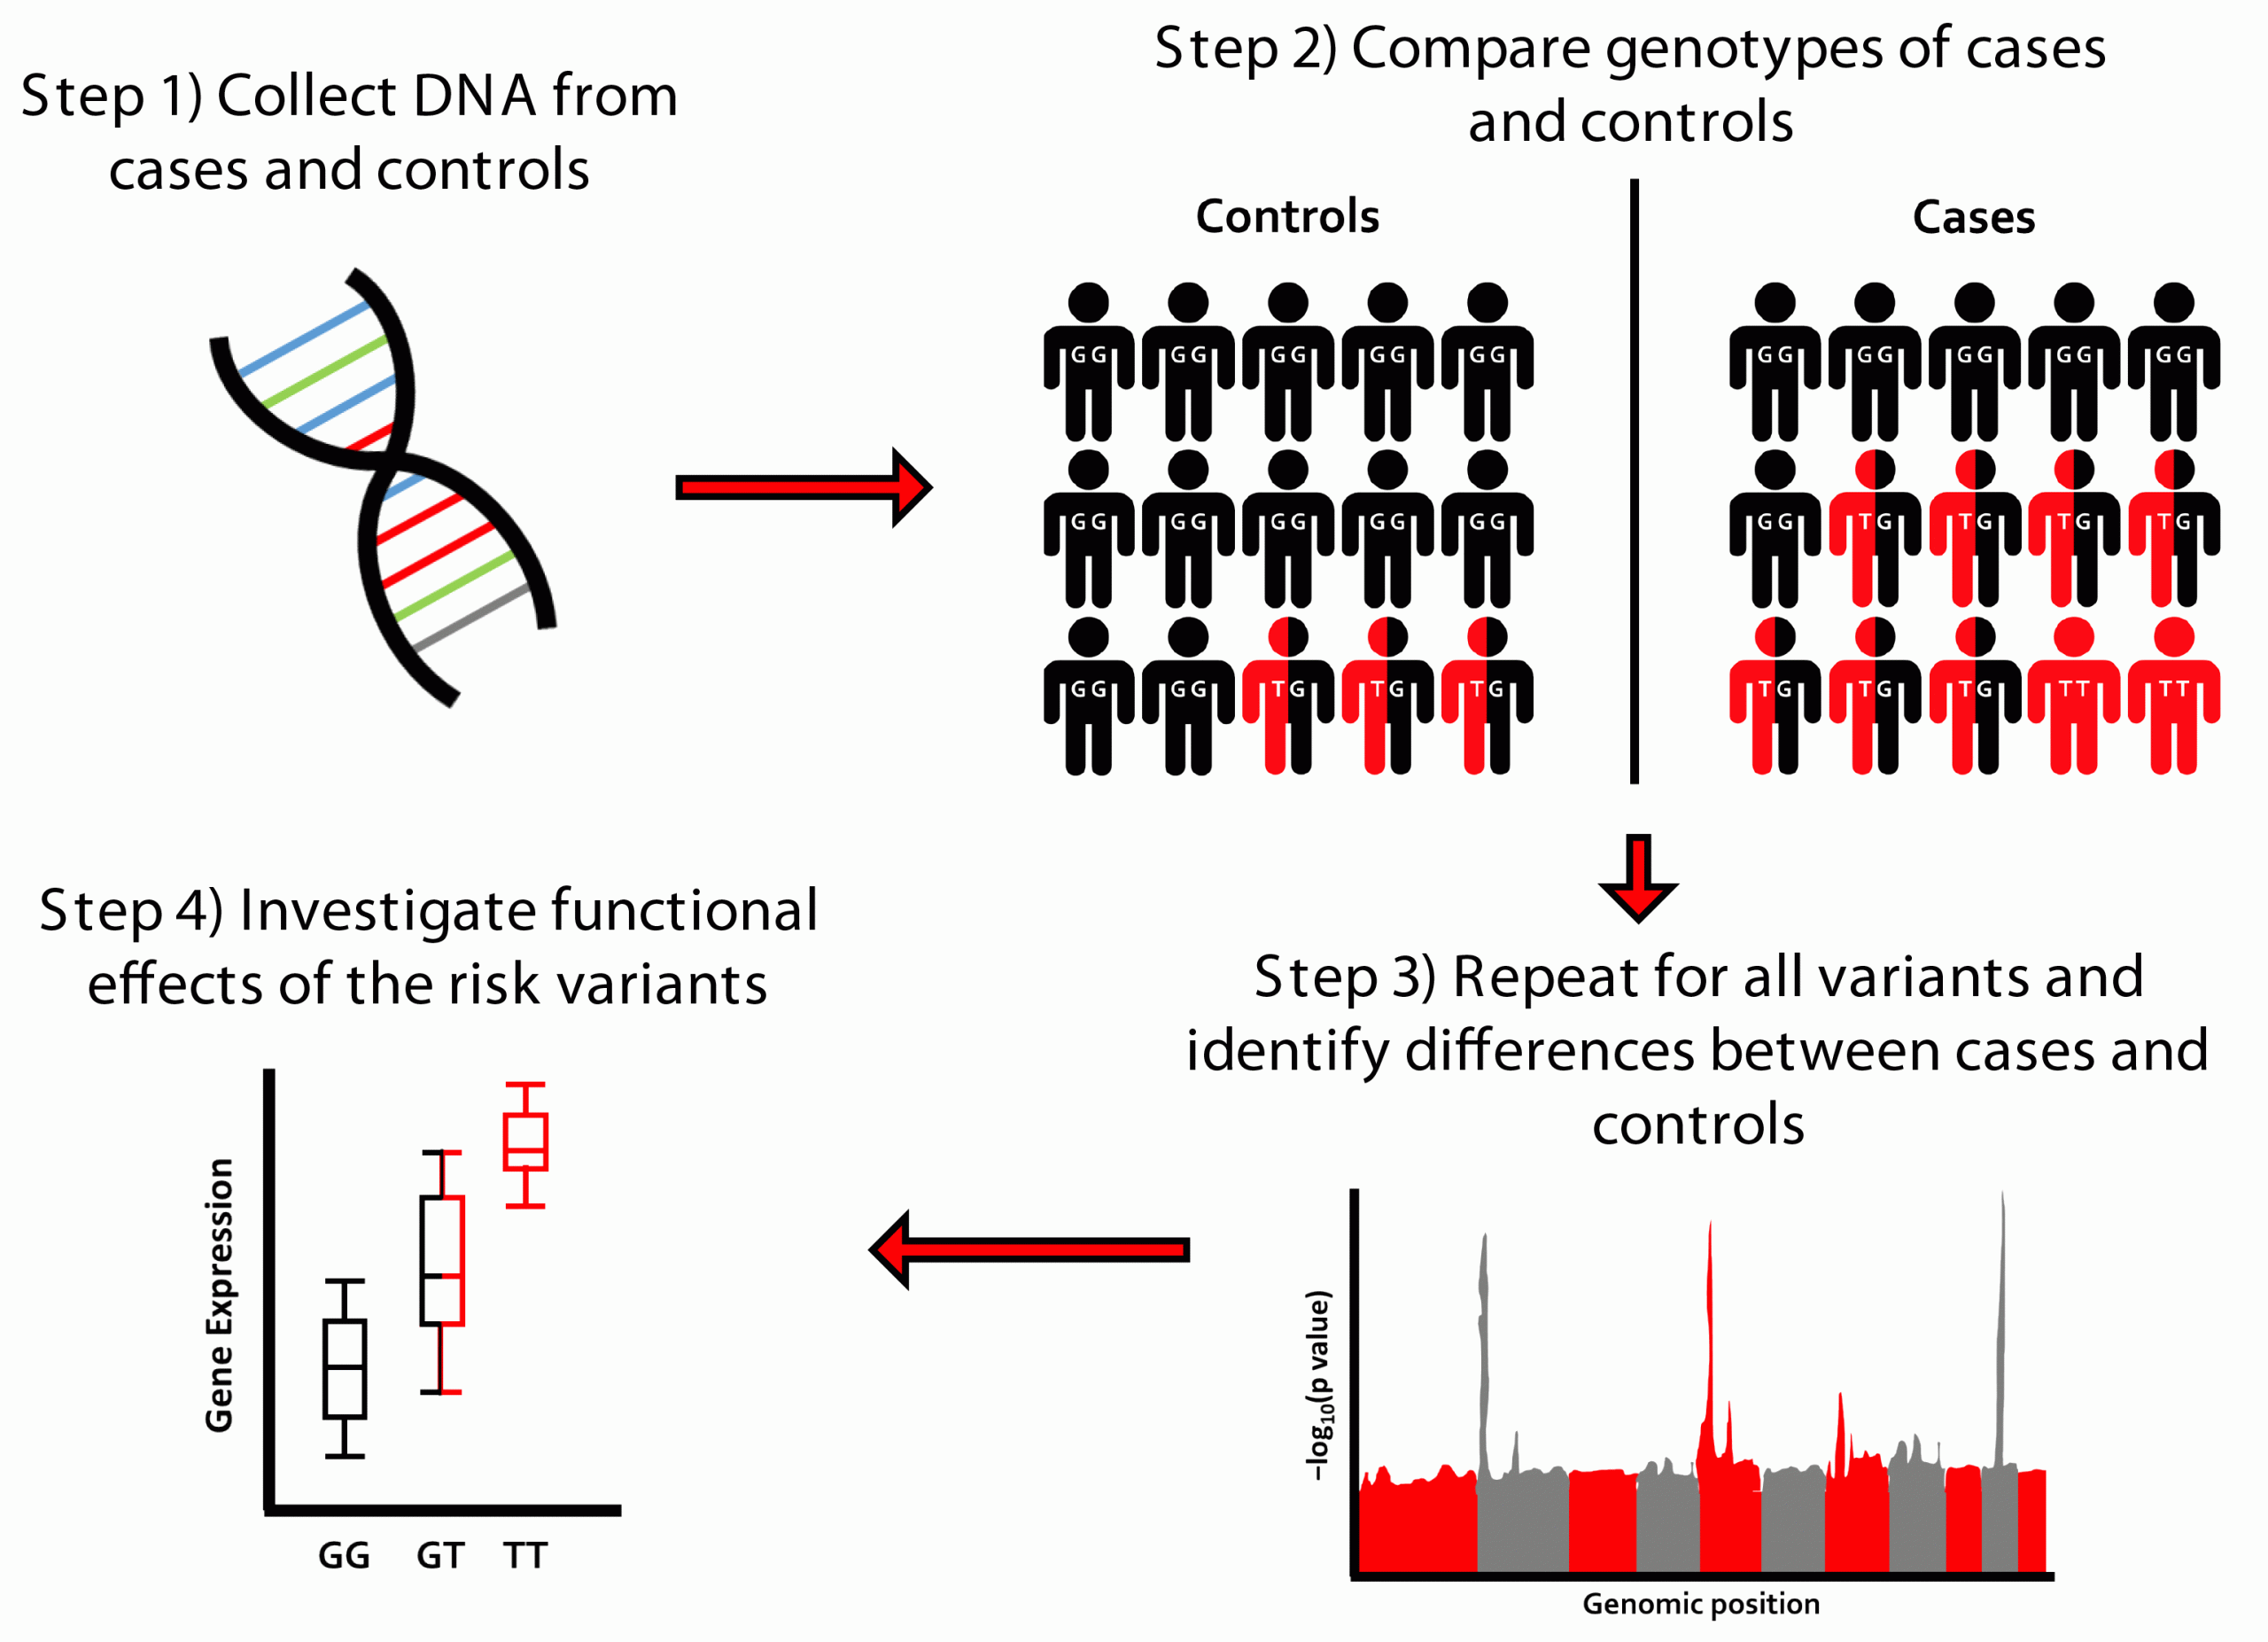 Figure 1. Overview of genome-wide association study (GWAS) design